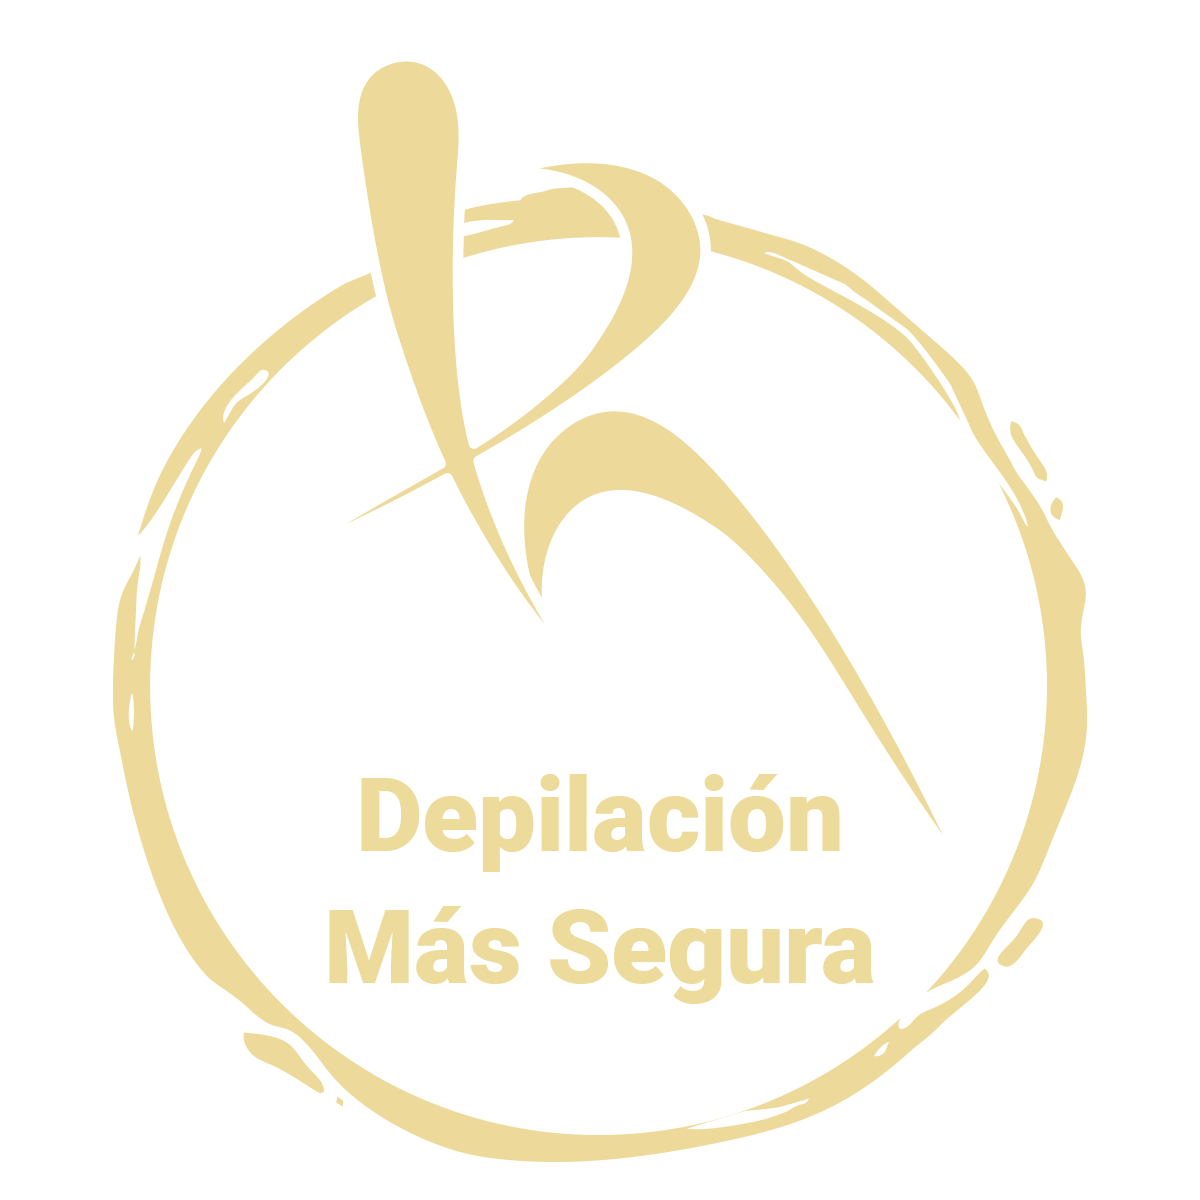 Centros de Depilación Láser SHR Reme Aguilar en Murcia y Molina de Segura - Servicios Hombres